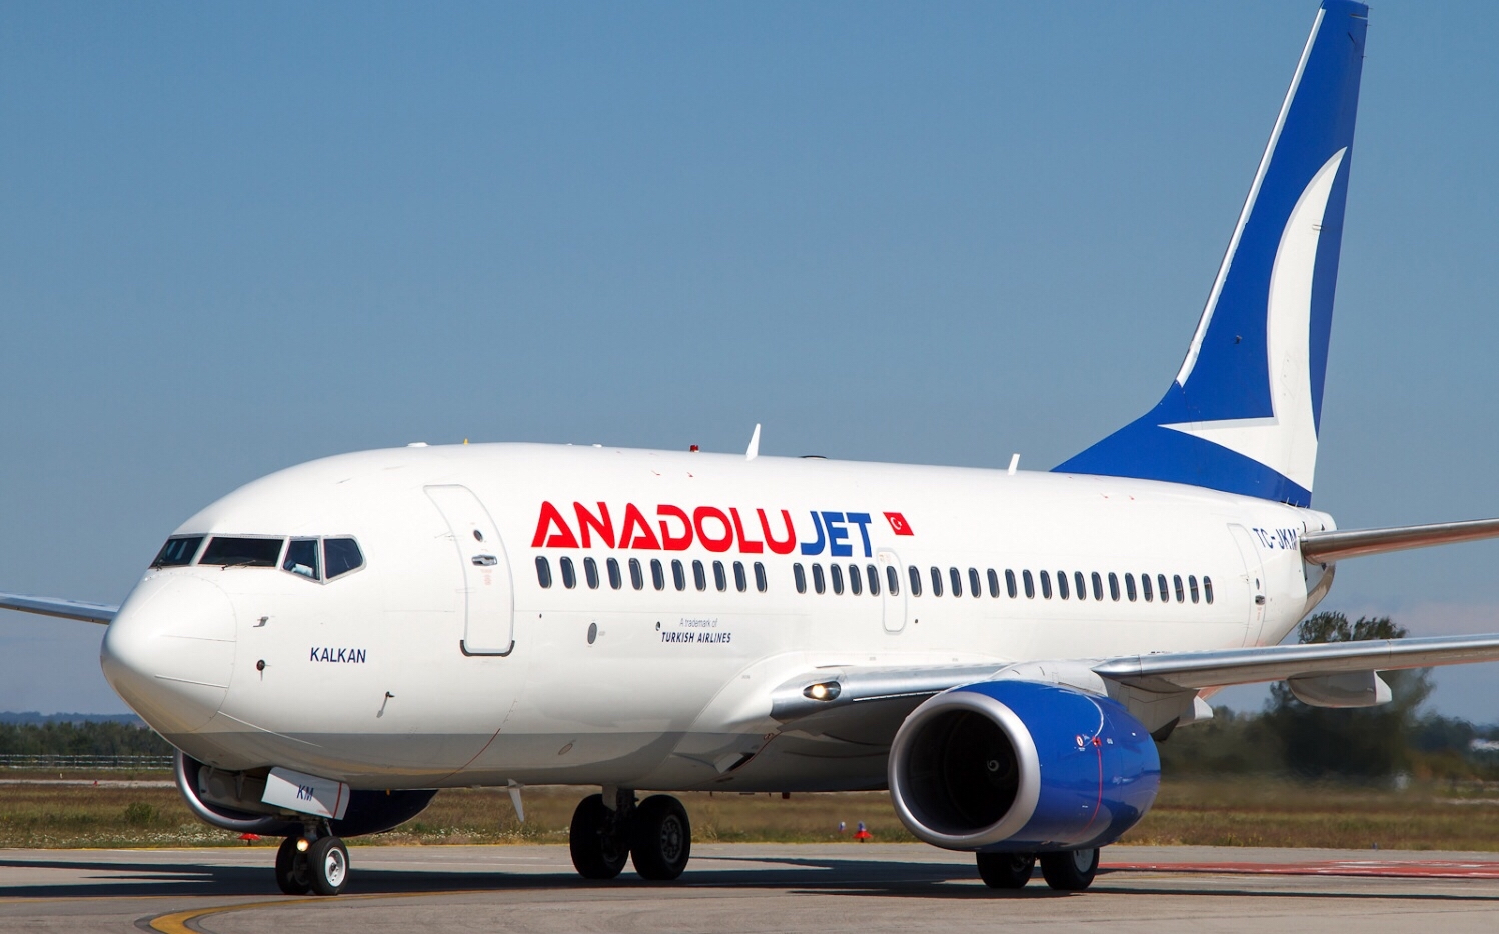 AnadoluJet inaugurates flights from Istanbul Sabiha Gökçen Airport to Milan Bergamo